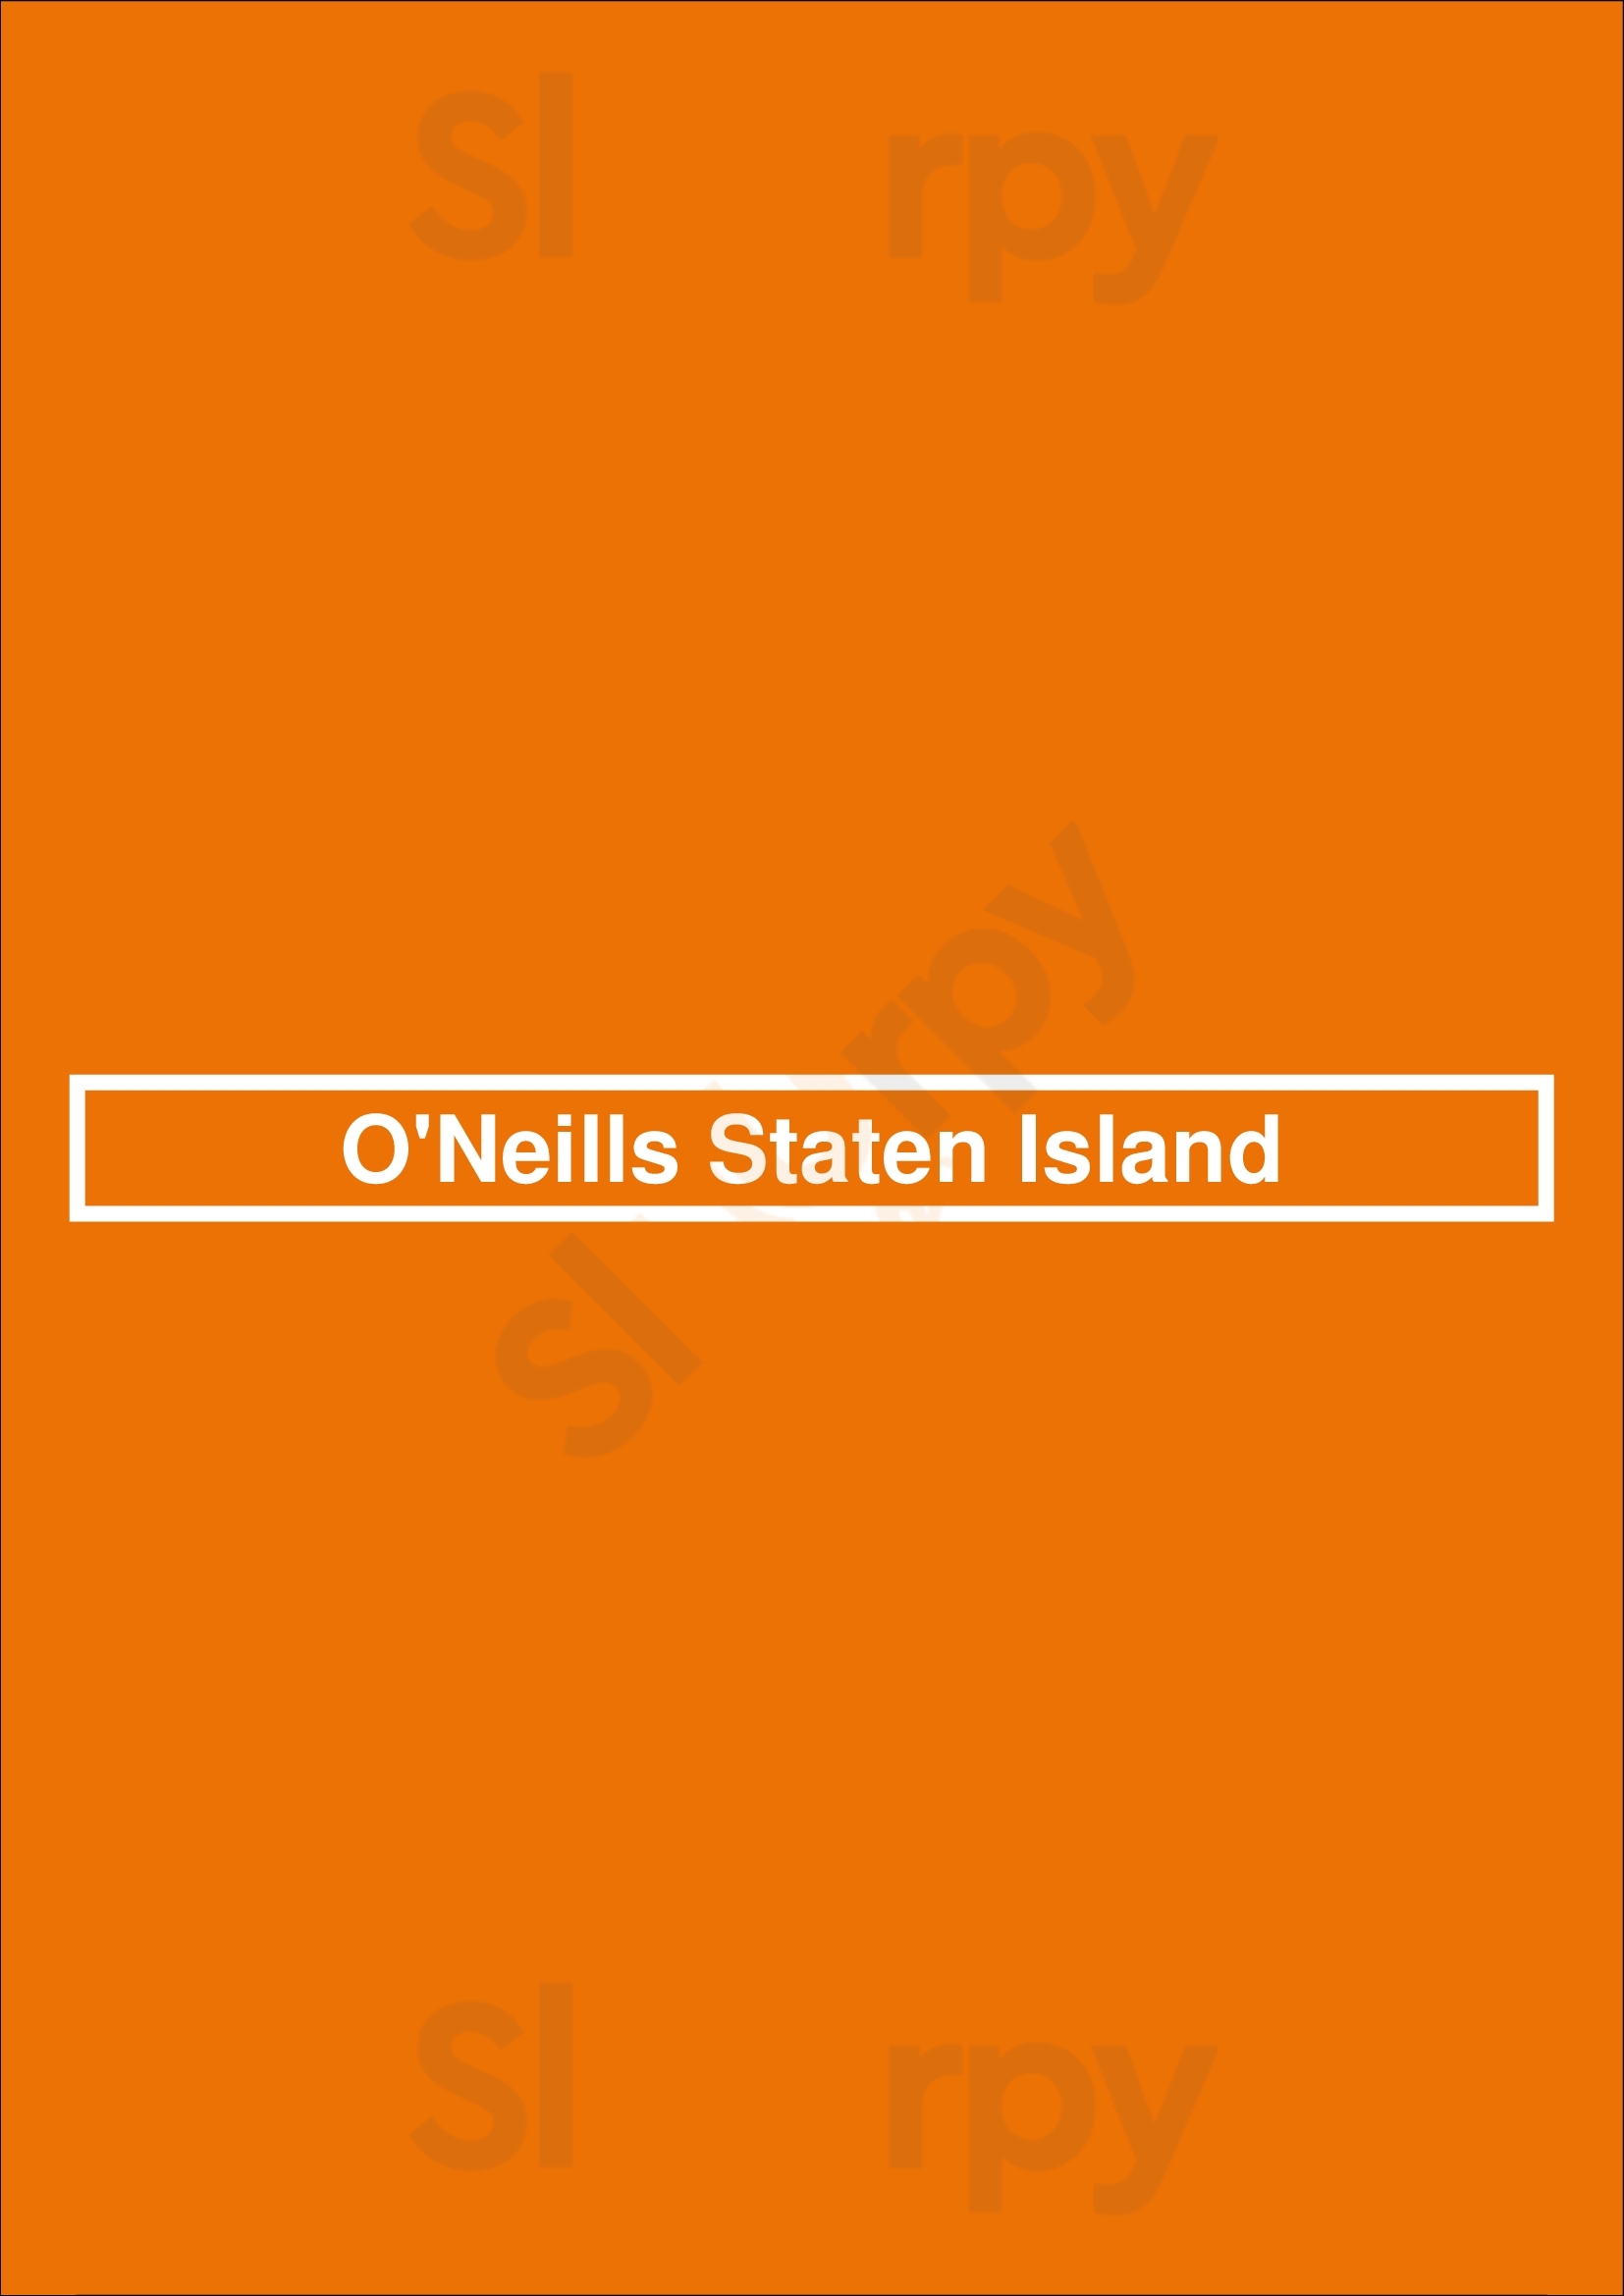 O'neill's Staten Island Menu - 1